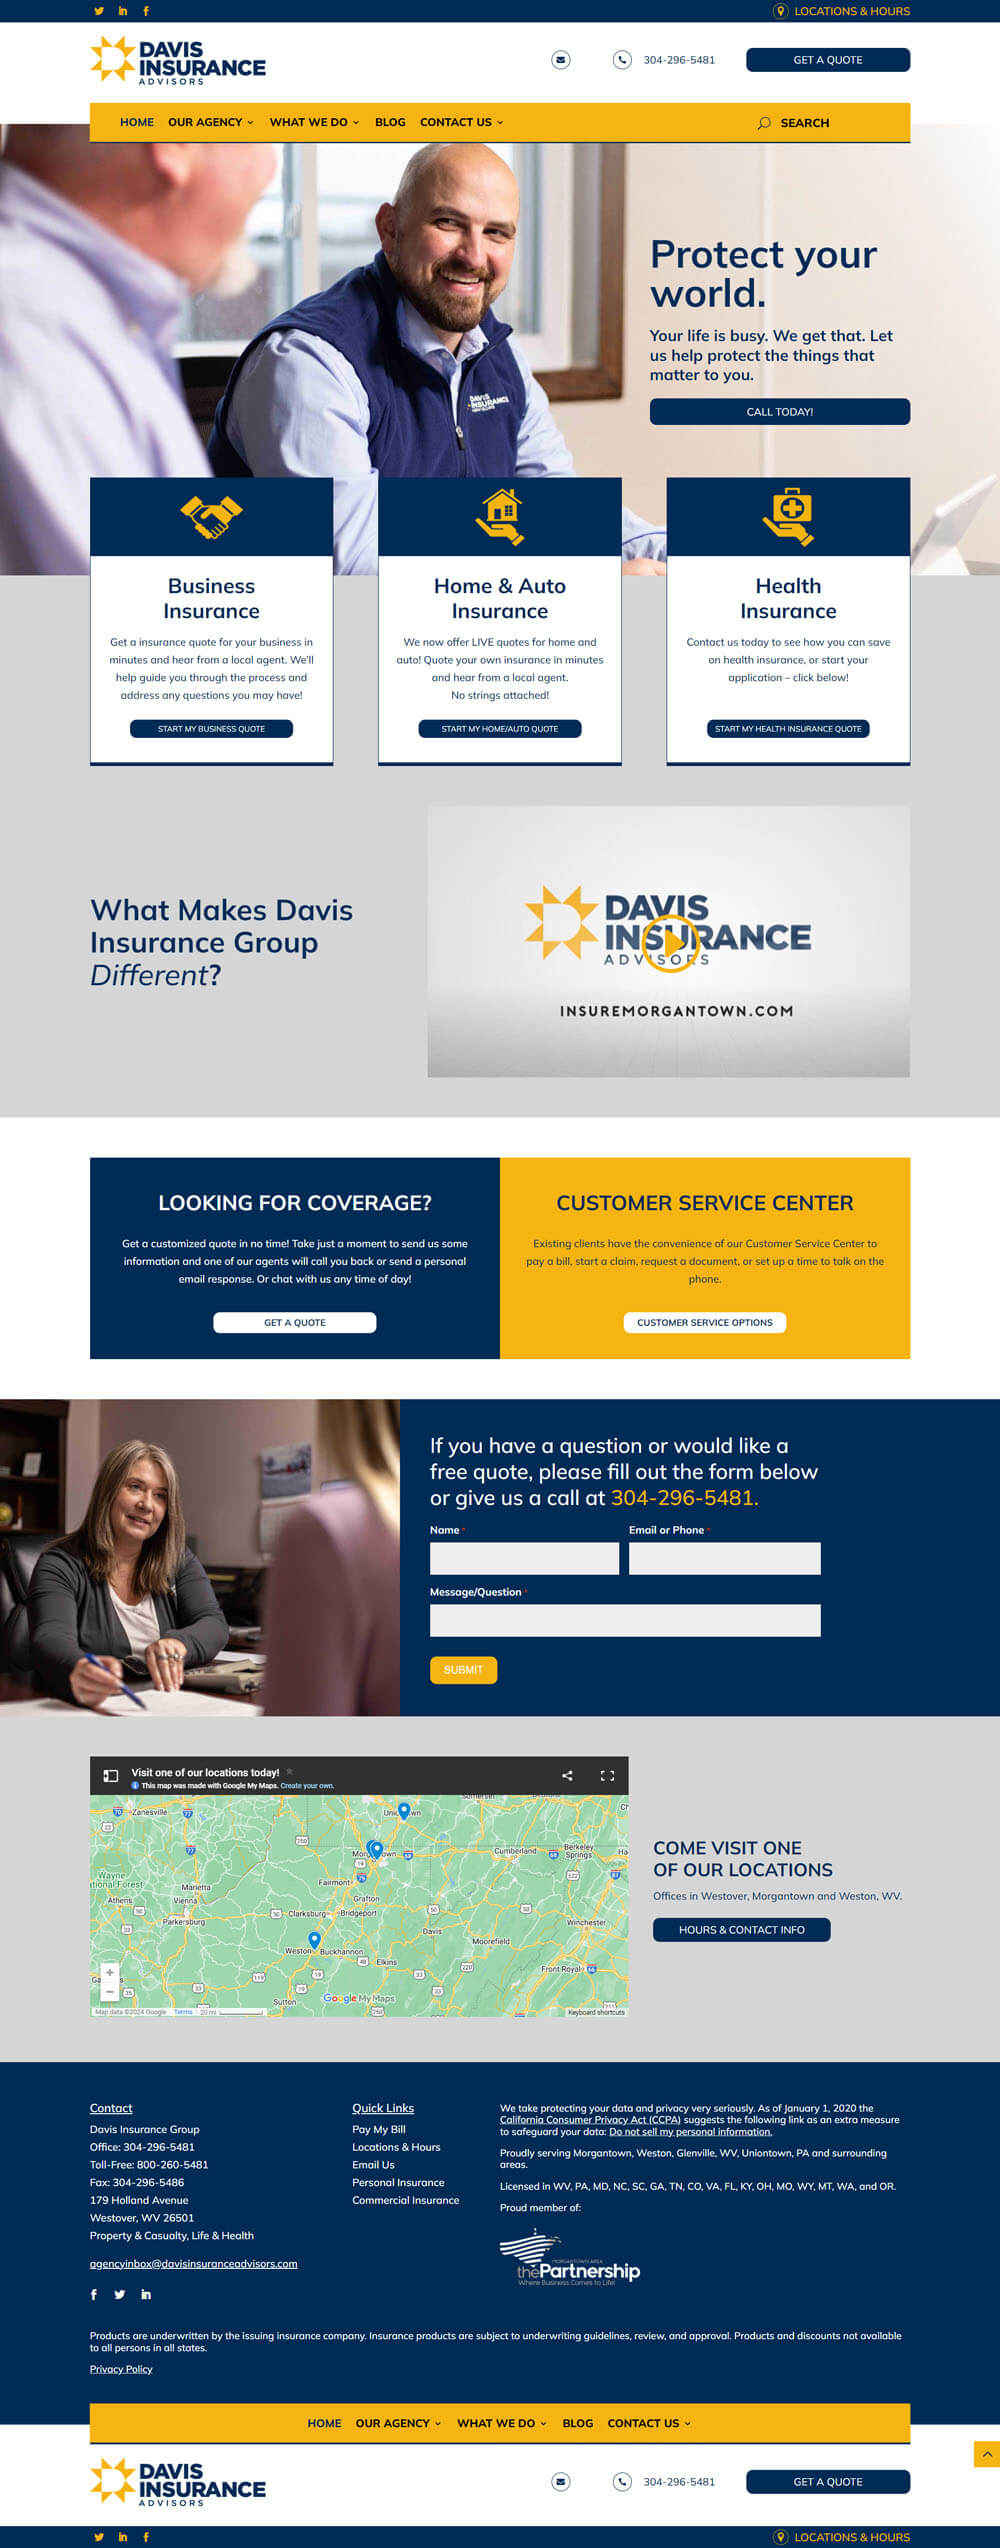 Davis Insurance Group